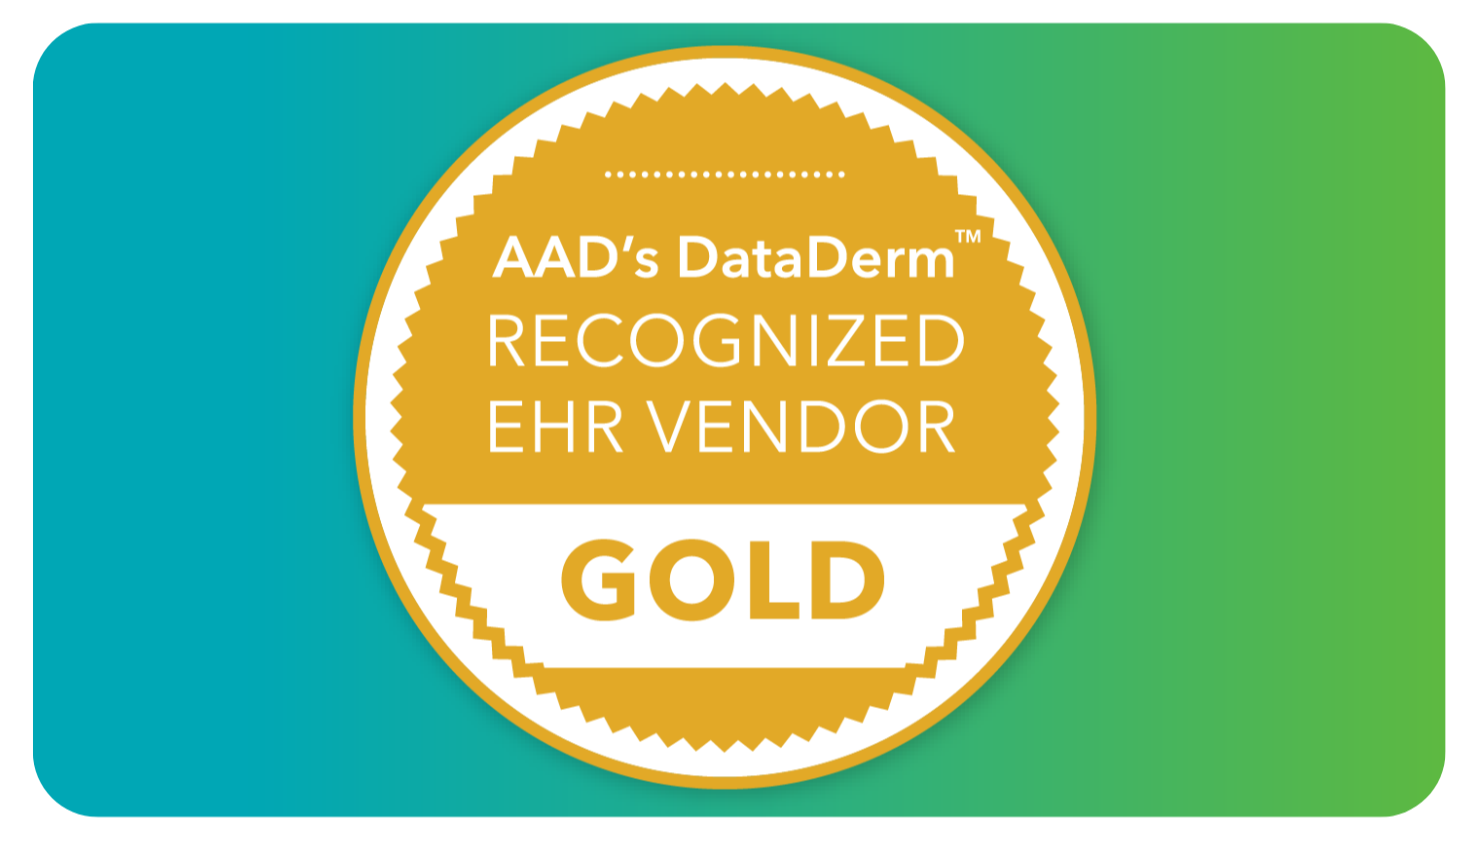 Nextech Dermatology EHR’s DataDerm Gold Recognition Benefits Practices